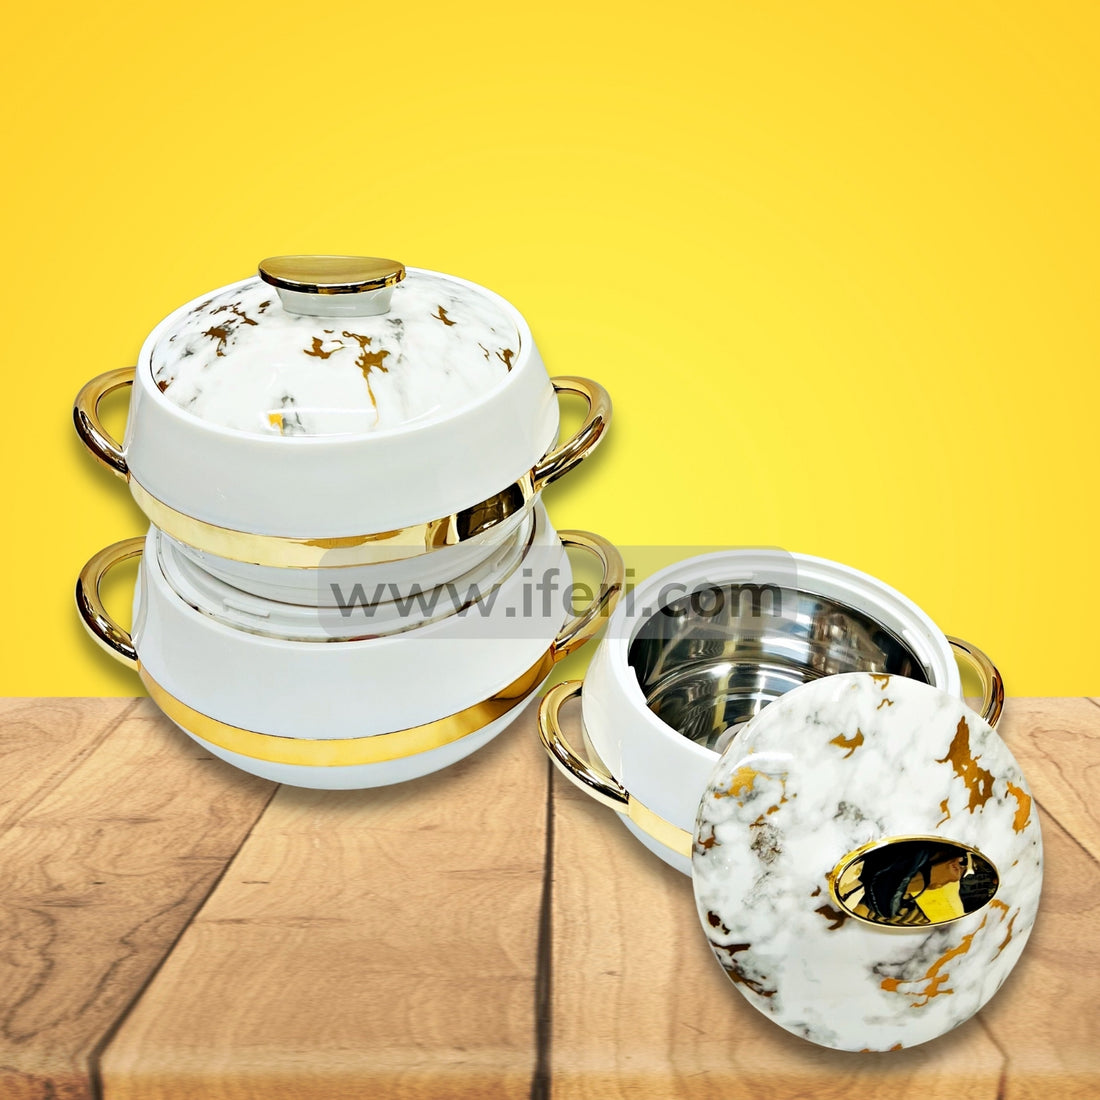 Buy Jaypee Food Storage Hotpot / Thermoware Casserole Set online from iferi.com in Bangladesh